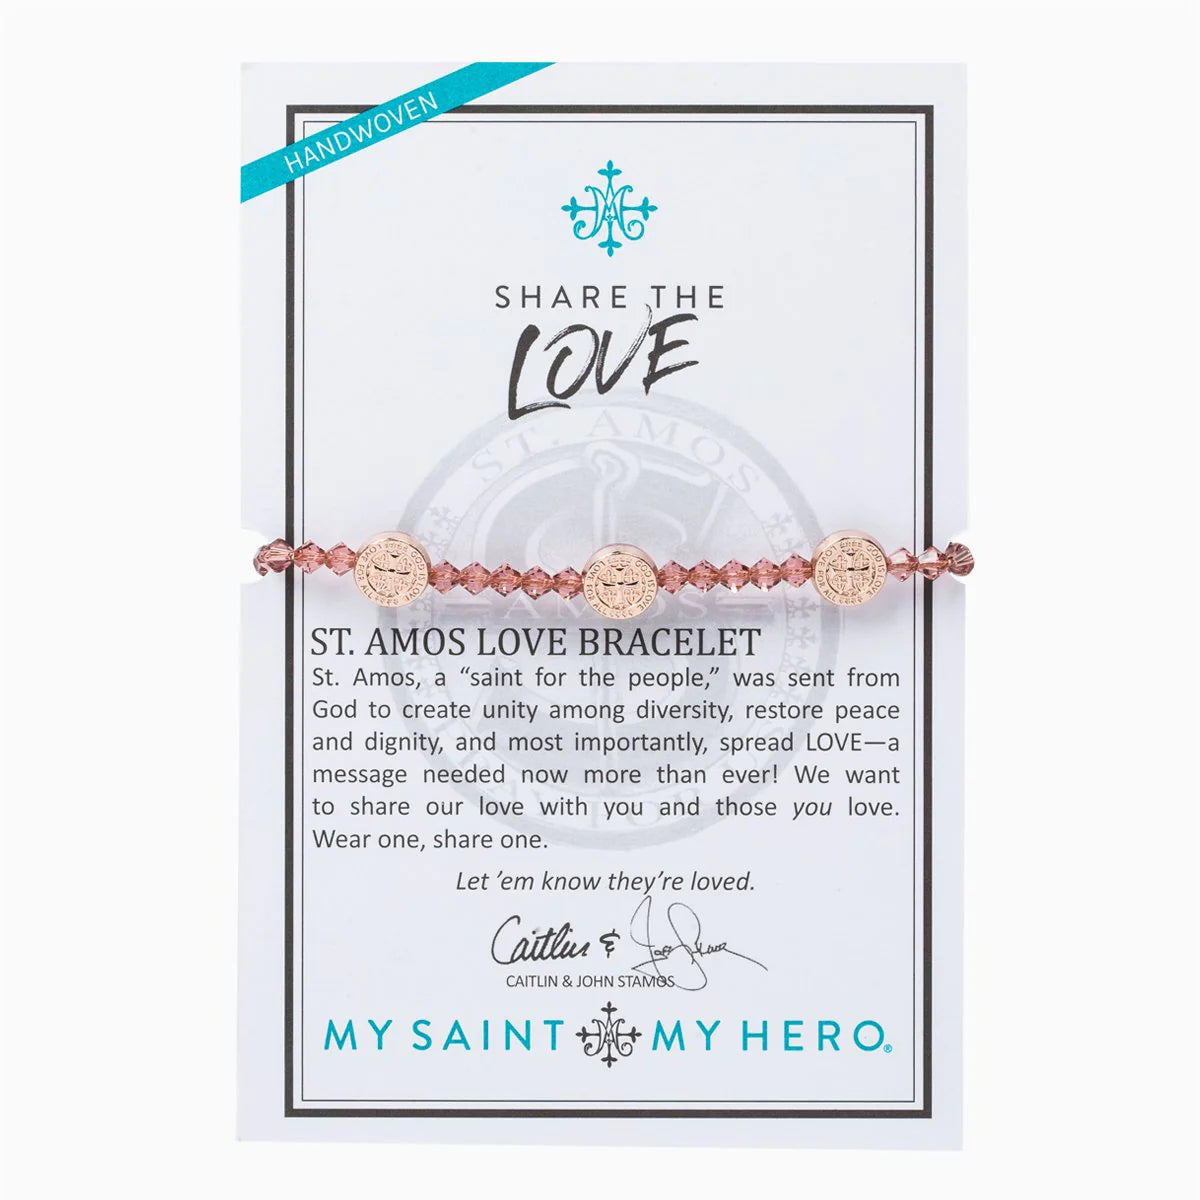 MSMH Share the Love Crystal Bracelet